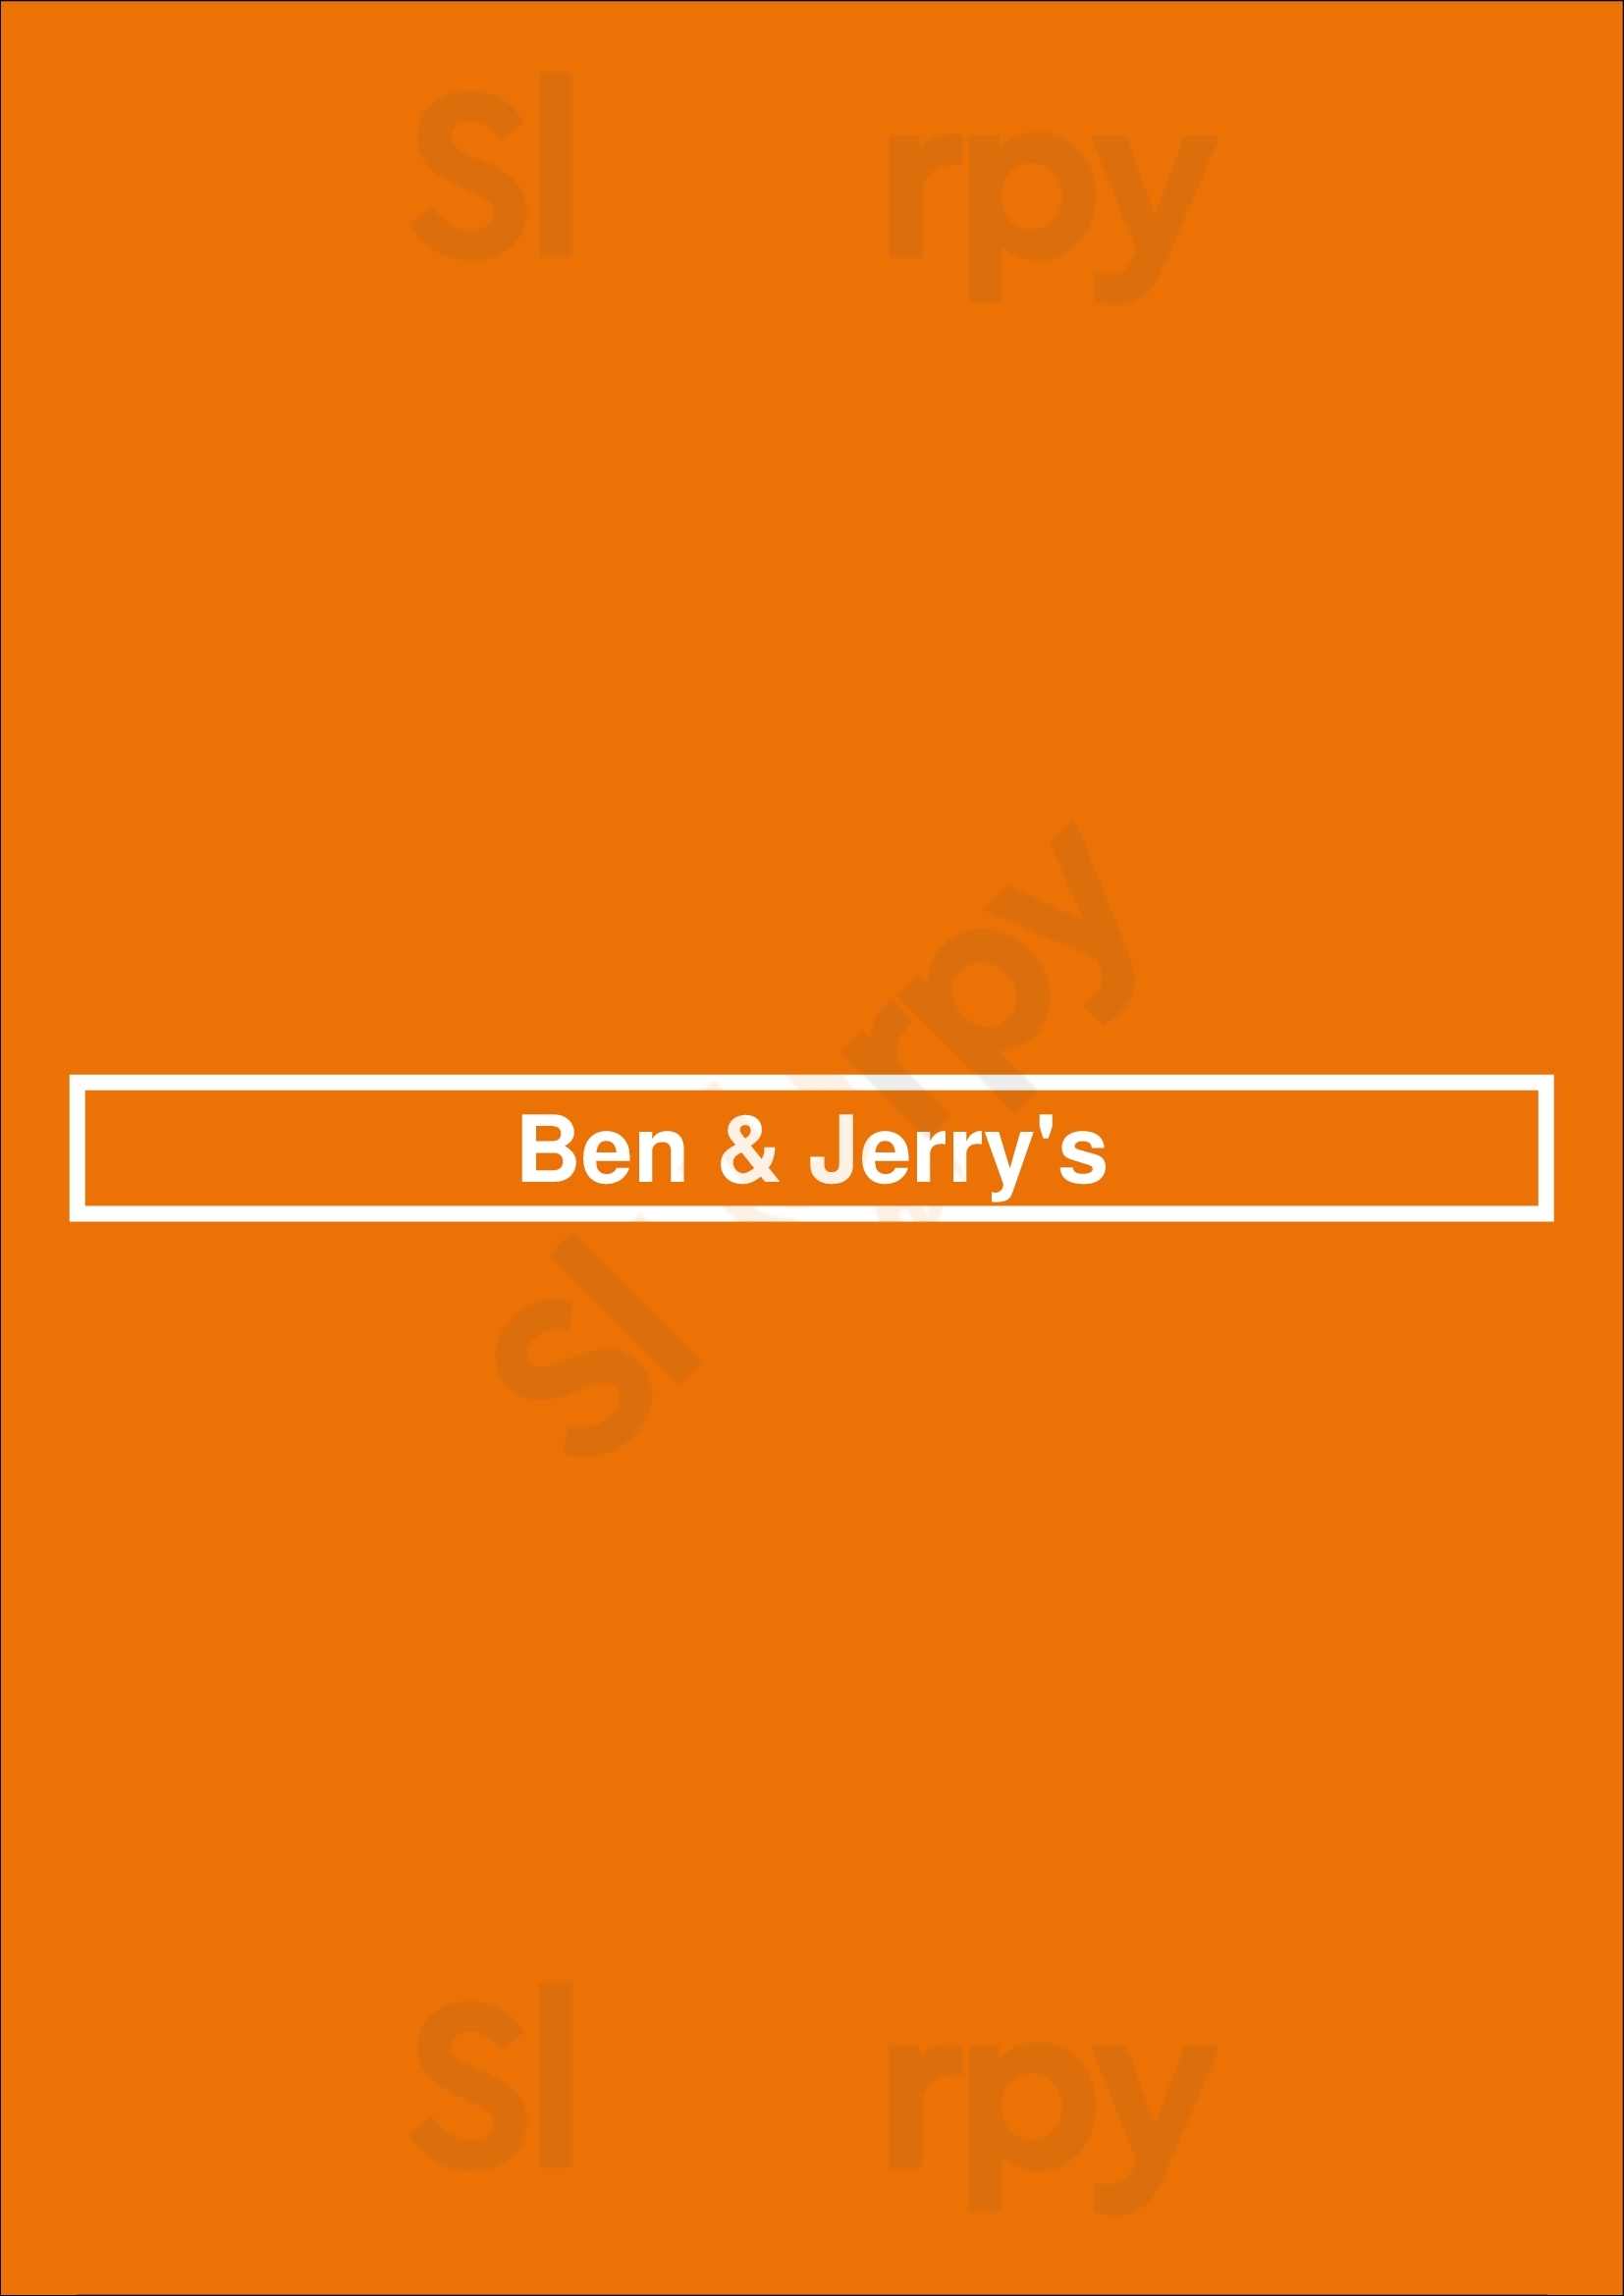 Ben & Jerry's Las Vegas Menu - 1